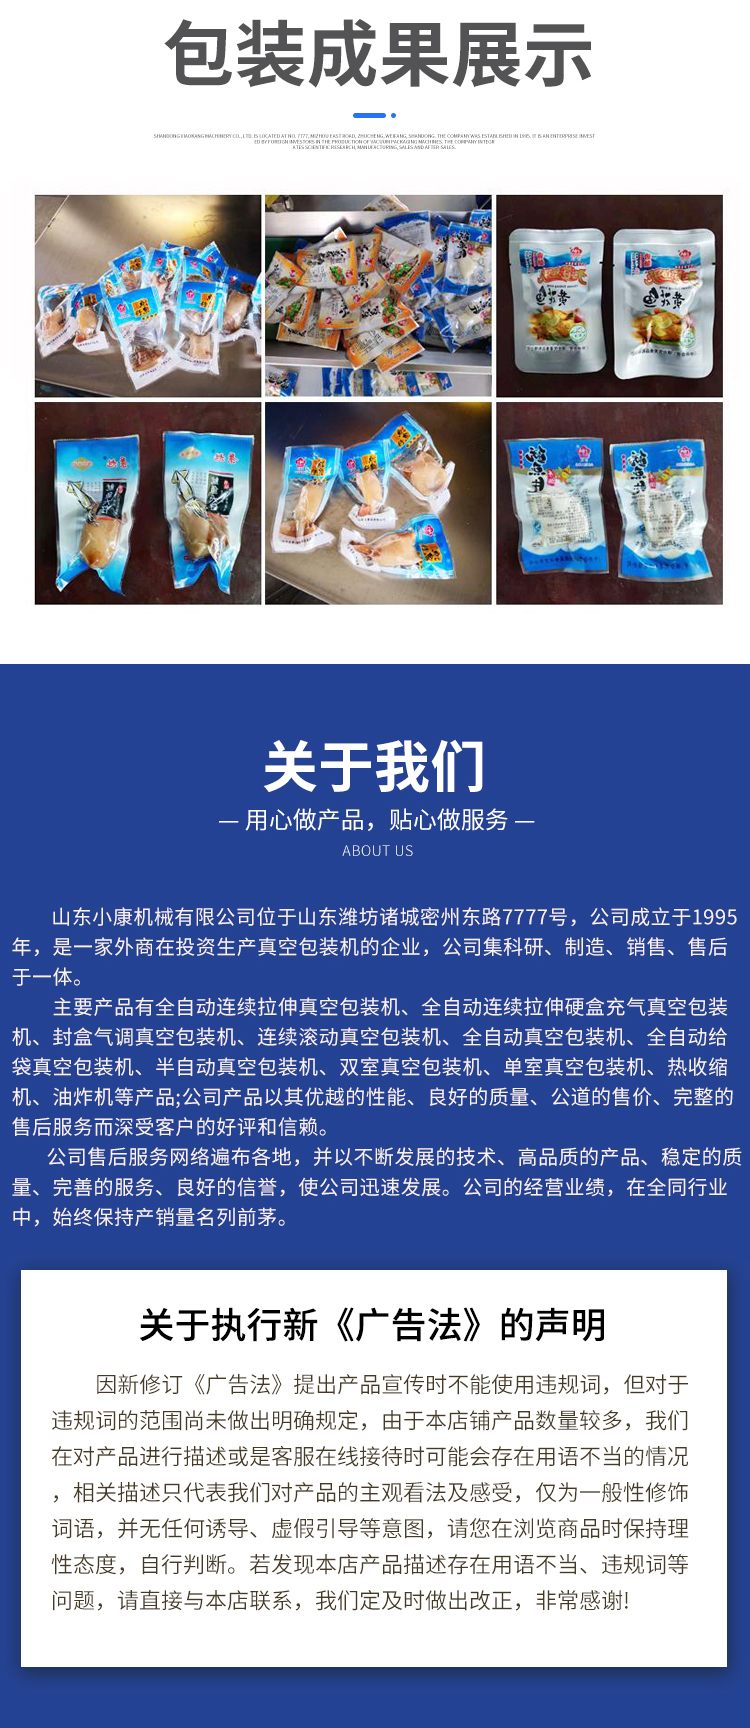 Dried tofu bag Vacuum packing machine ginseng honey tablets Vacuum packing equipment performance stability